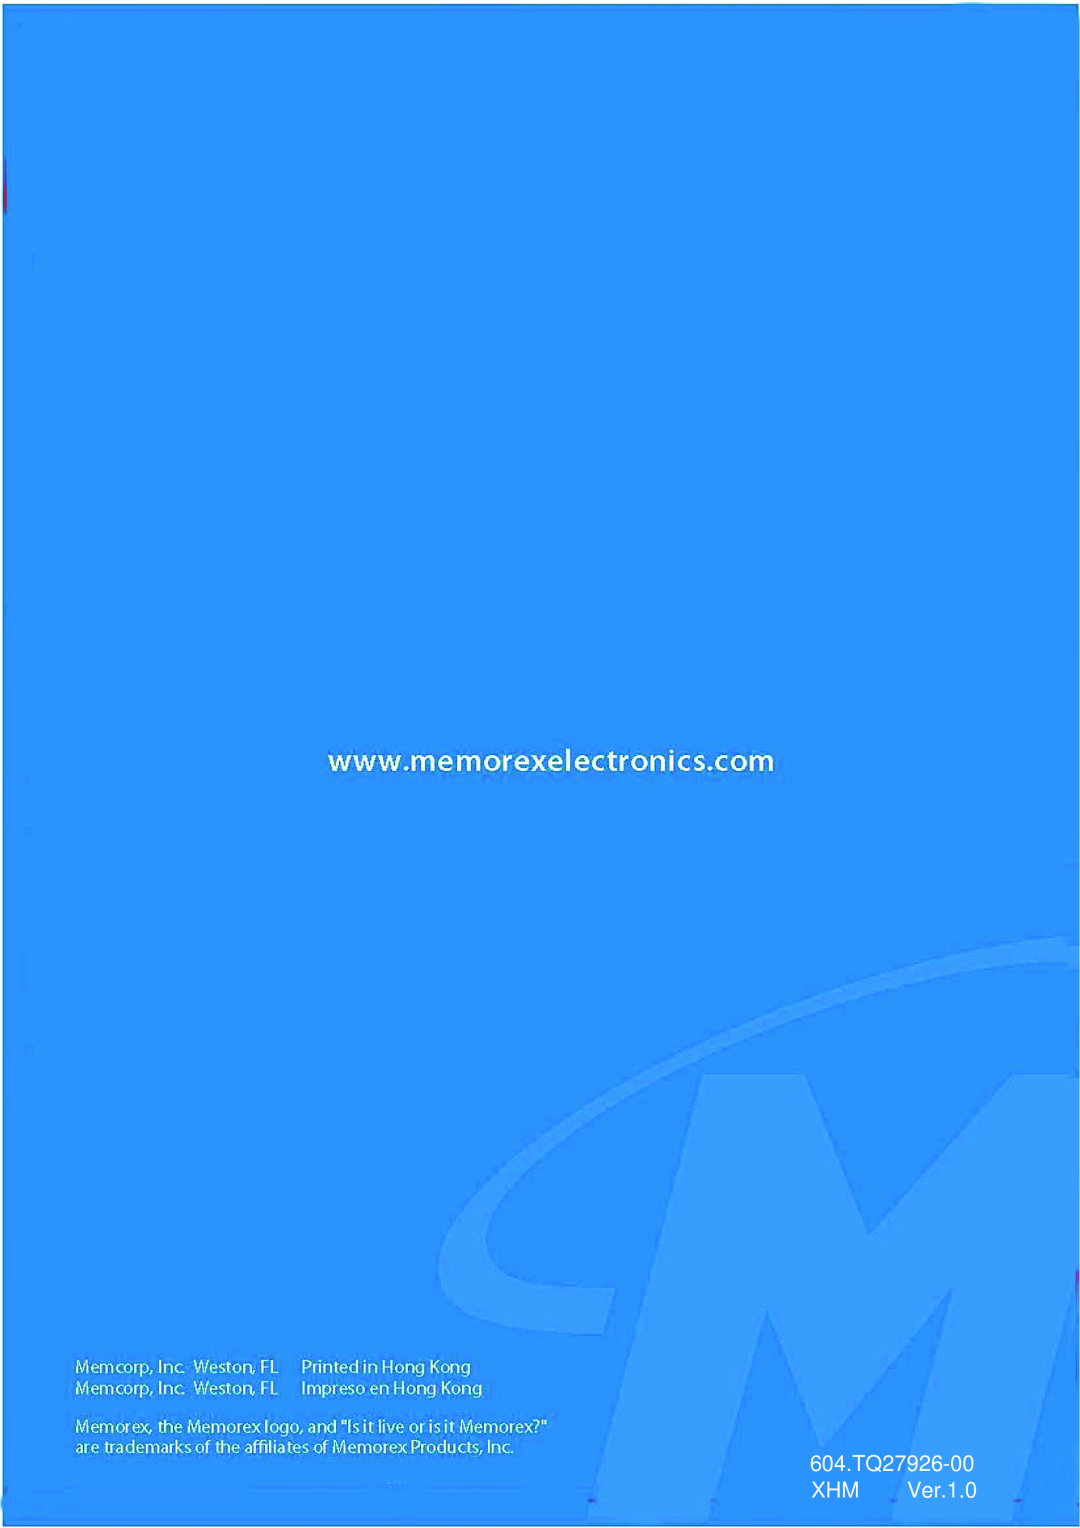 Memorex Flat Screen Tv manual 604.TQ27926-00 XHM Ver.1.0 